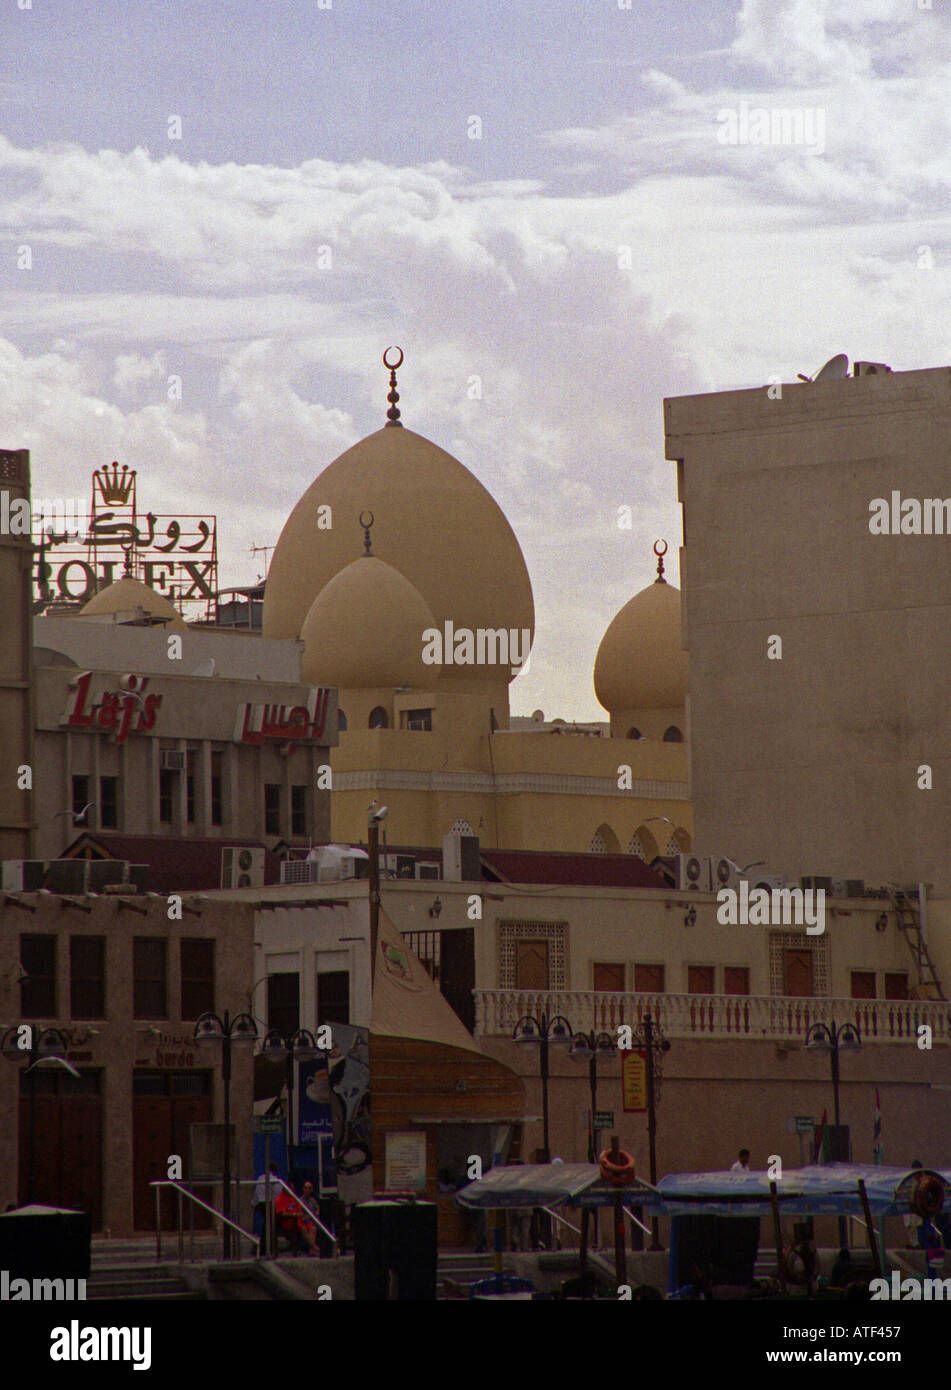 Traditionelle typischen farbenfrohen Kolonialgebäude Straßenbild Stadtbild Moschee Wolken Dubai UAE Middle East South Asia Stockfoto